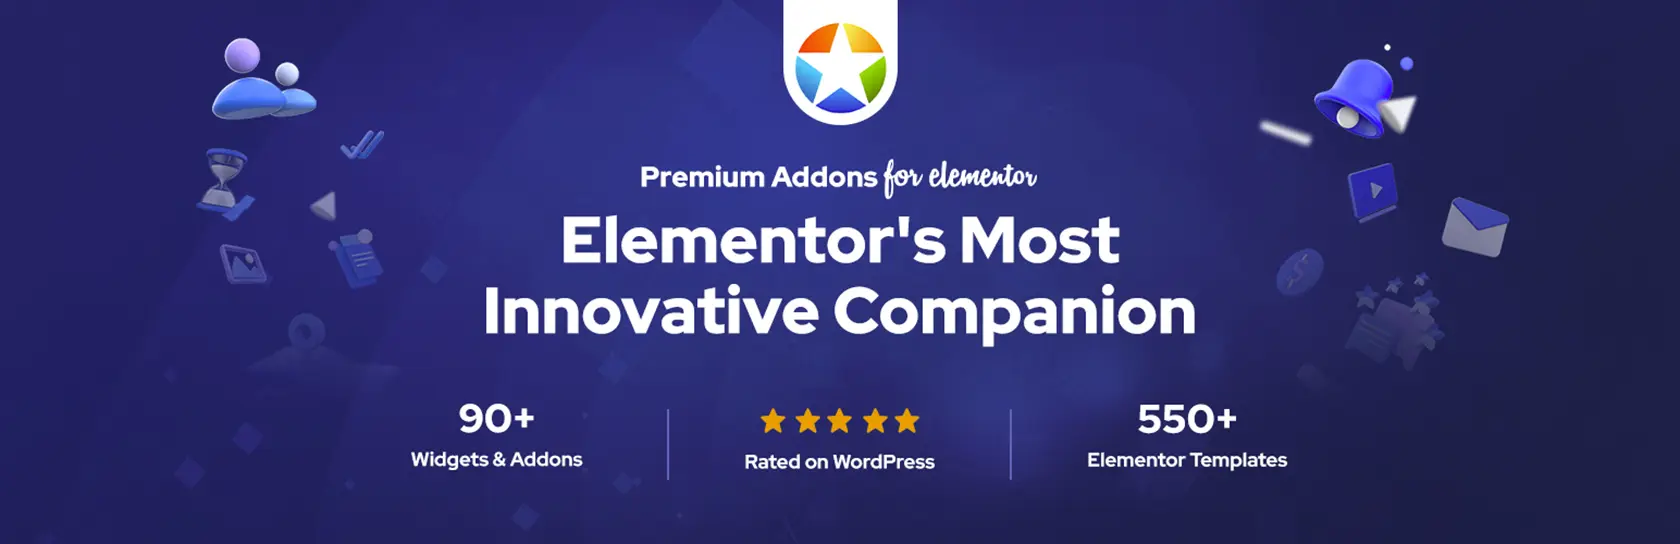 Elementor 使用教學：最受歡迎WordPress拖放式頁面編輯器 | WordPress網頁設計